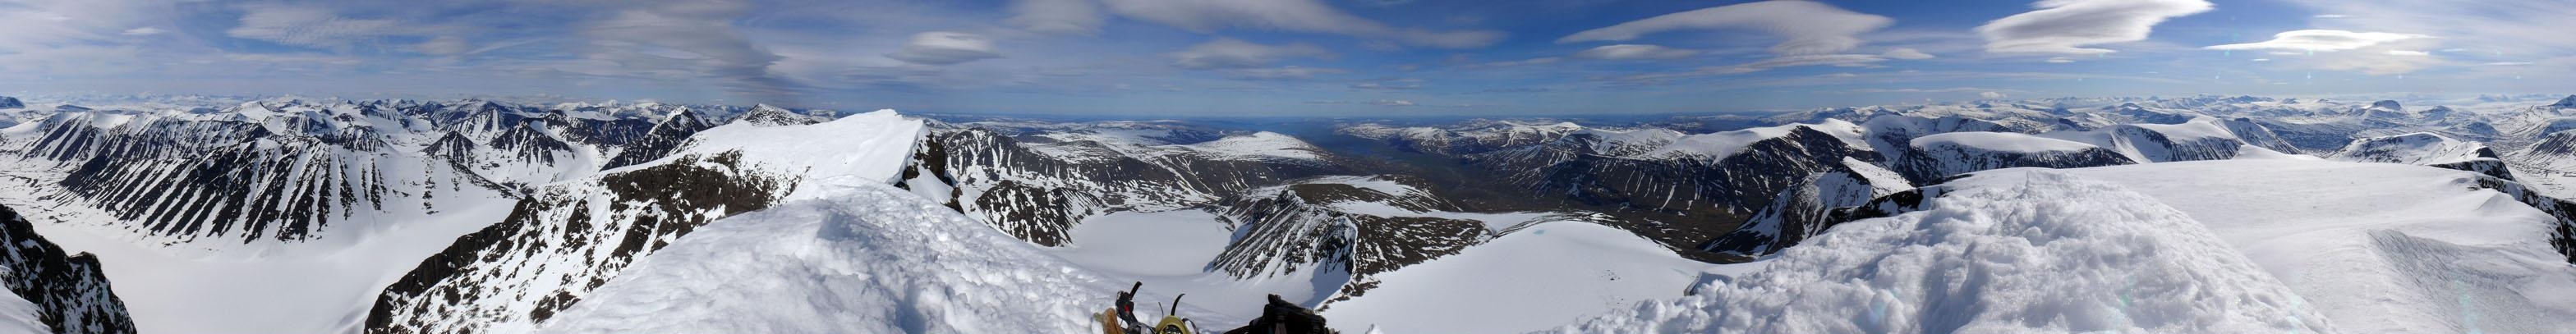 12. Скандинавские горы панорама